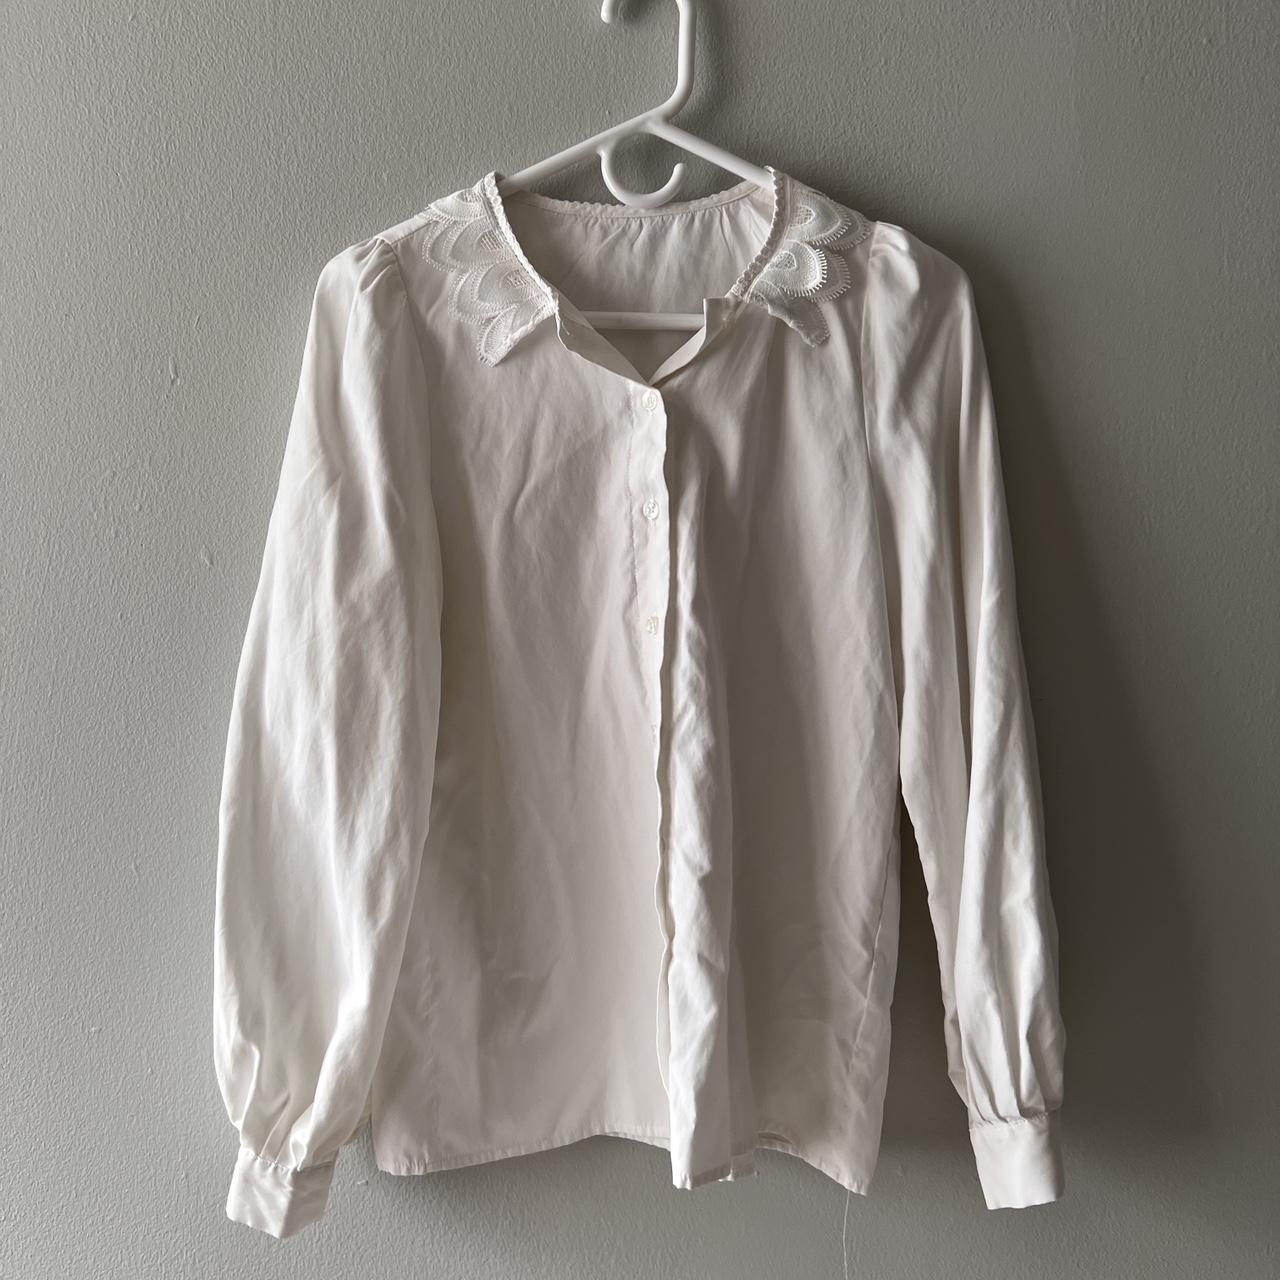 Ledin detailed collared shirt One size Website no... - Depop